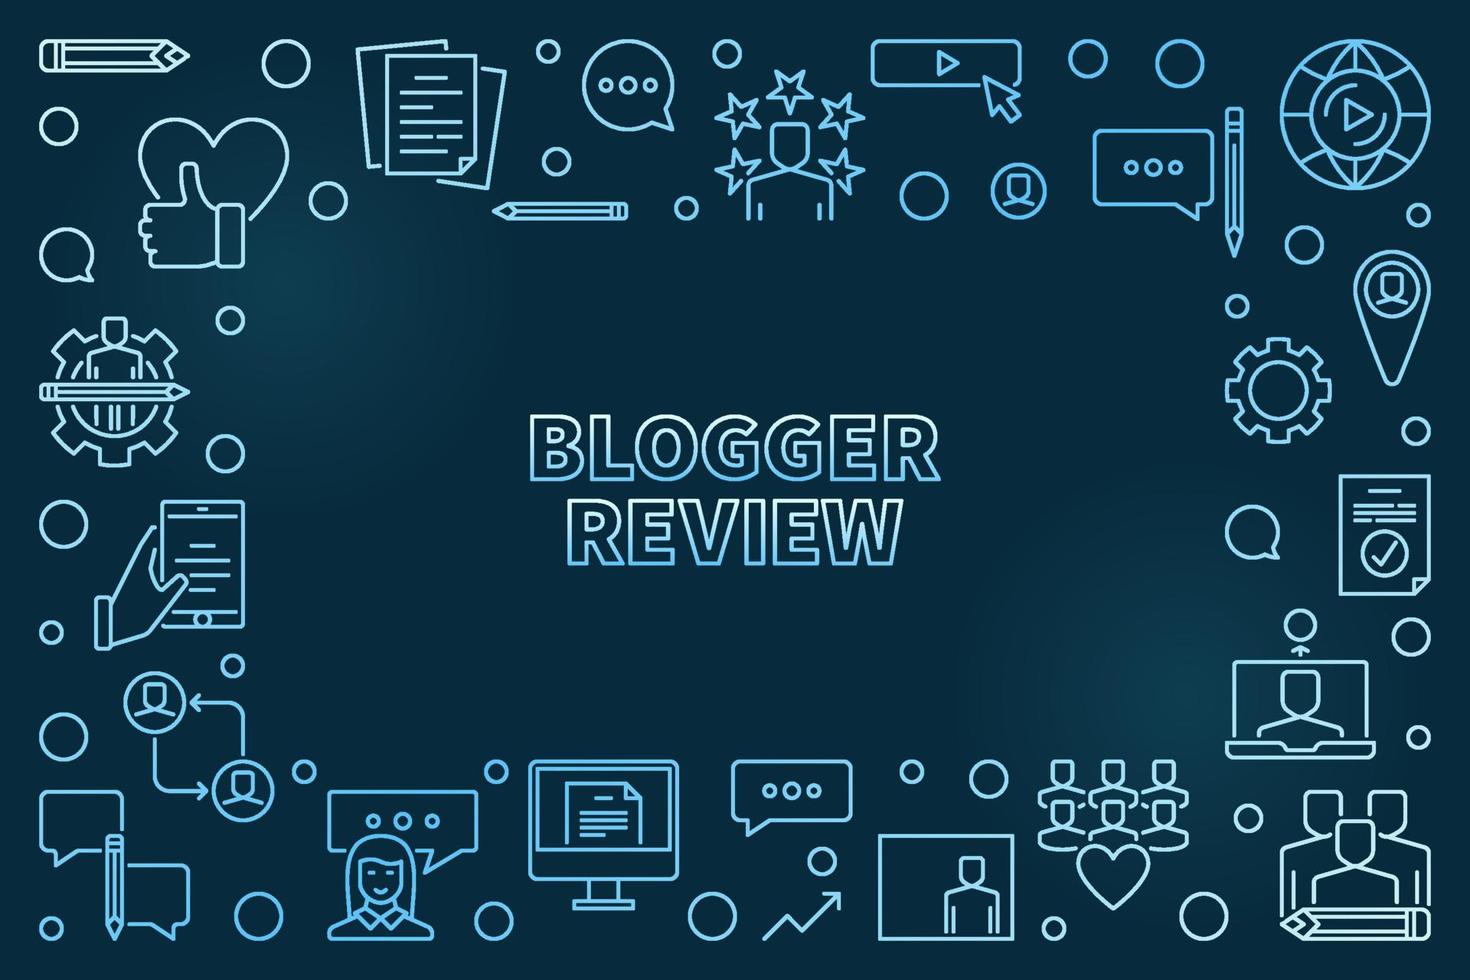 Blogger Review Vektor blaues Konzept lineare Abbildung oder Rahmen